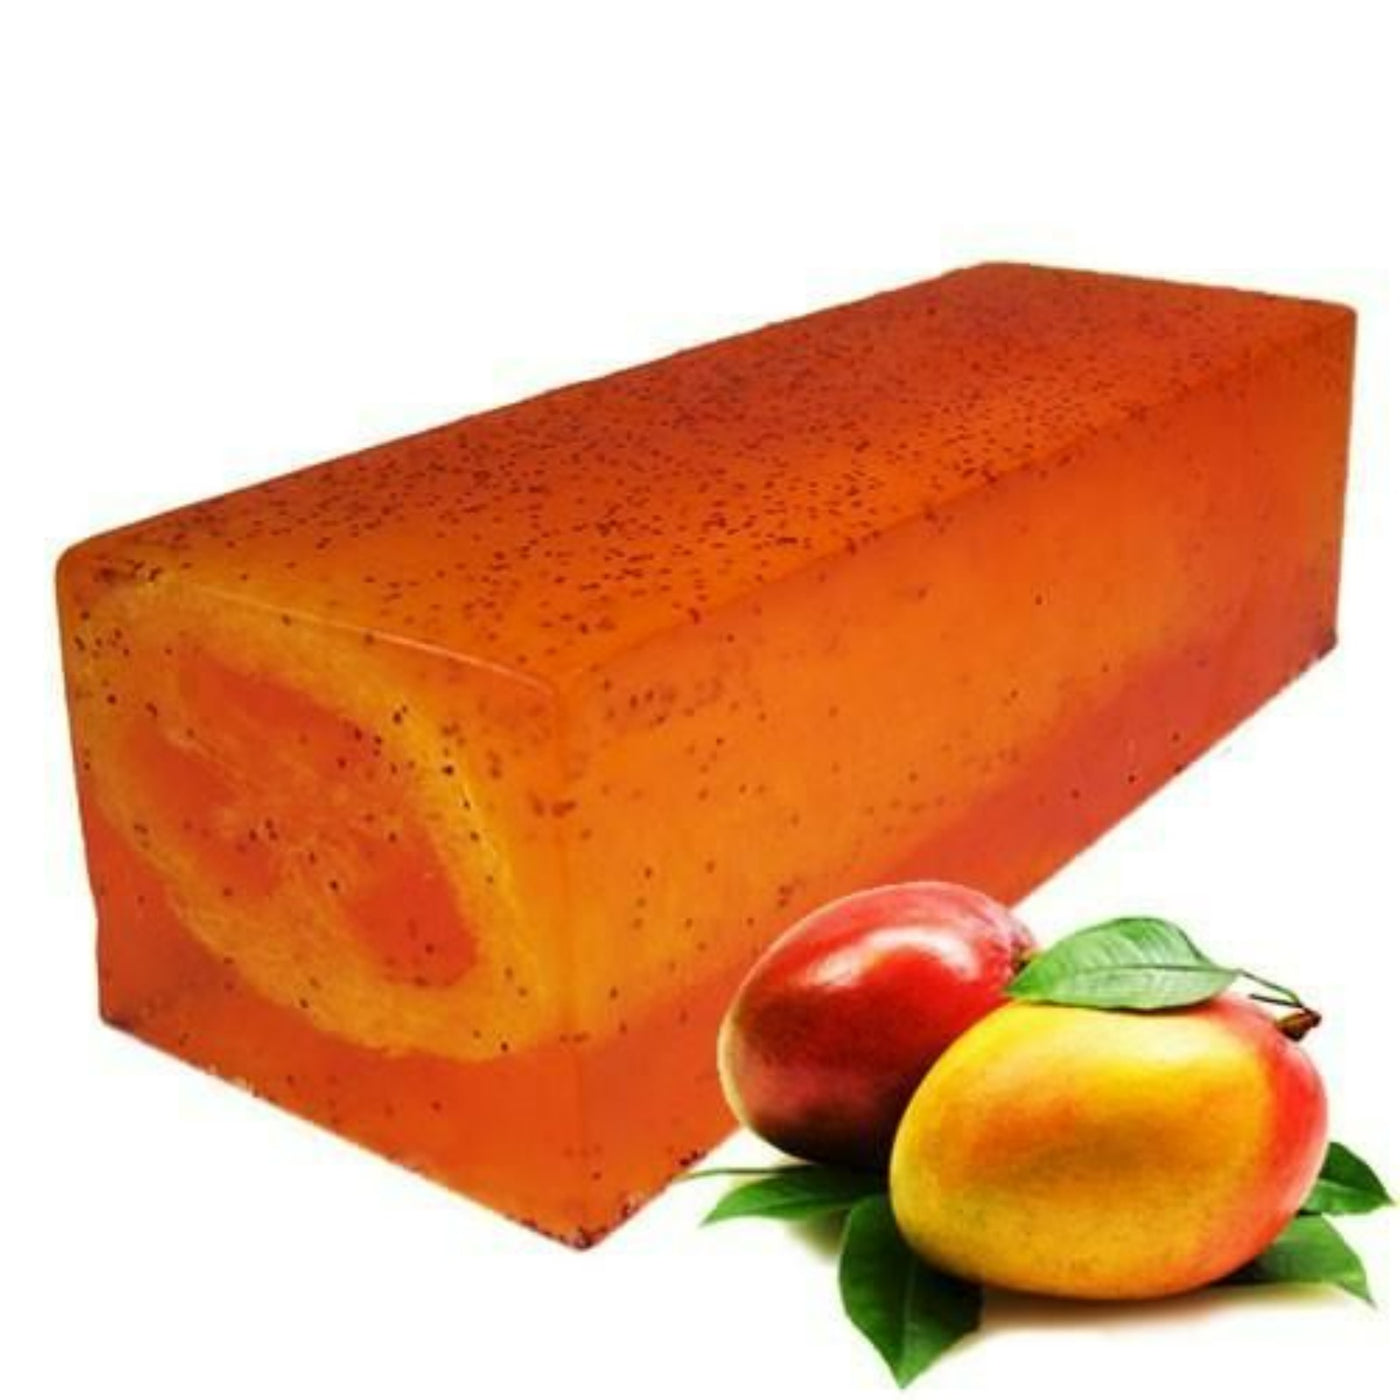 Loofah Exfoliating Soap Loaf - Mighty Juicy Mango Massage.